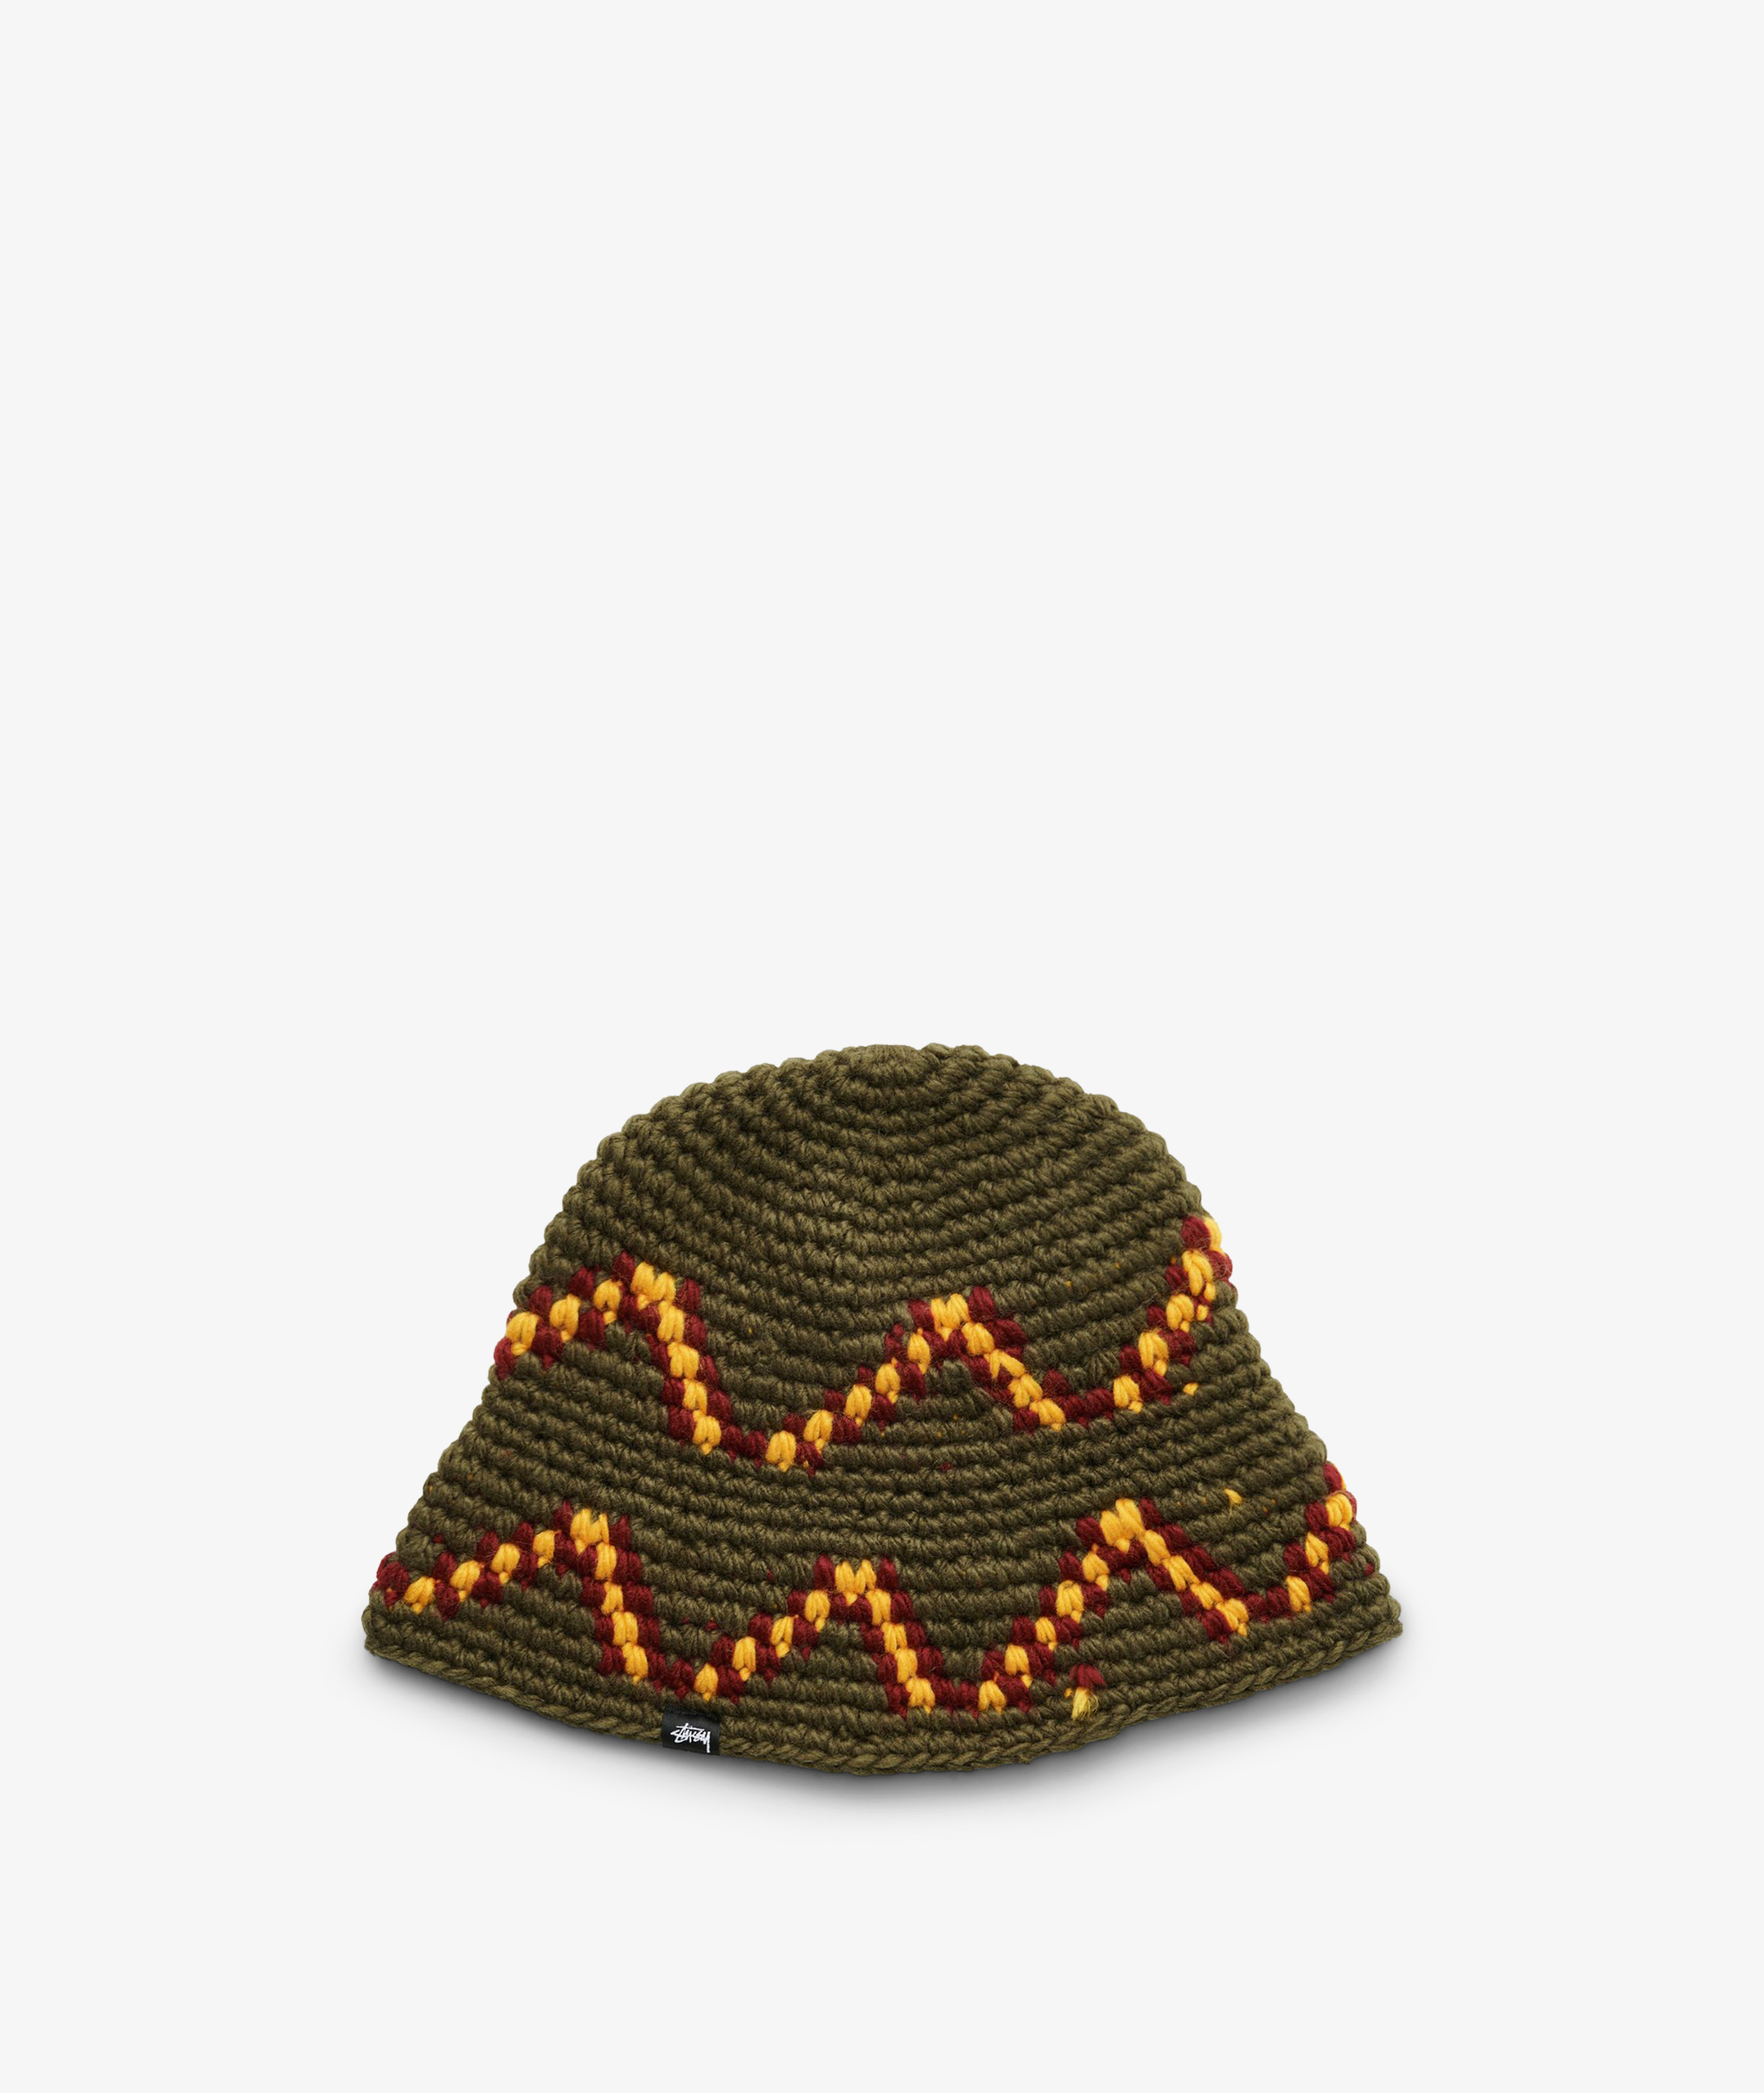 Norse Store | Shipping Worldwide - Stüssy Giza Knit Bucket Hat - Olive